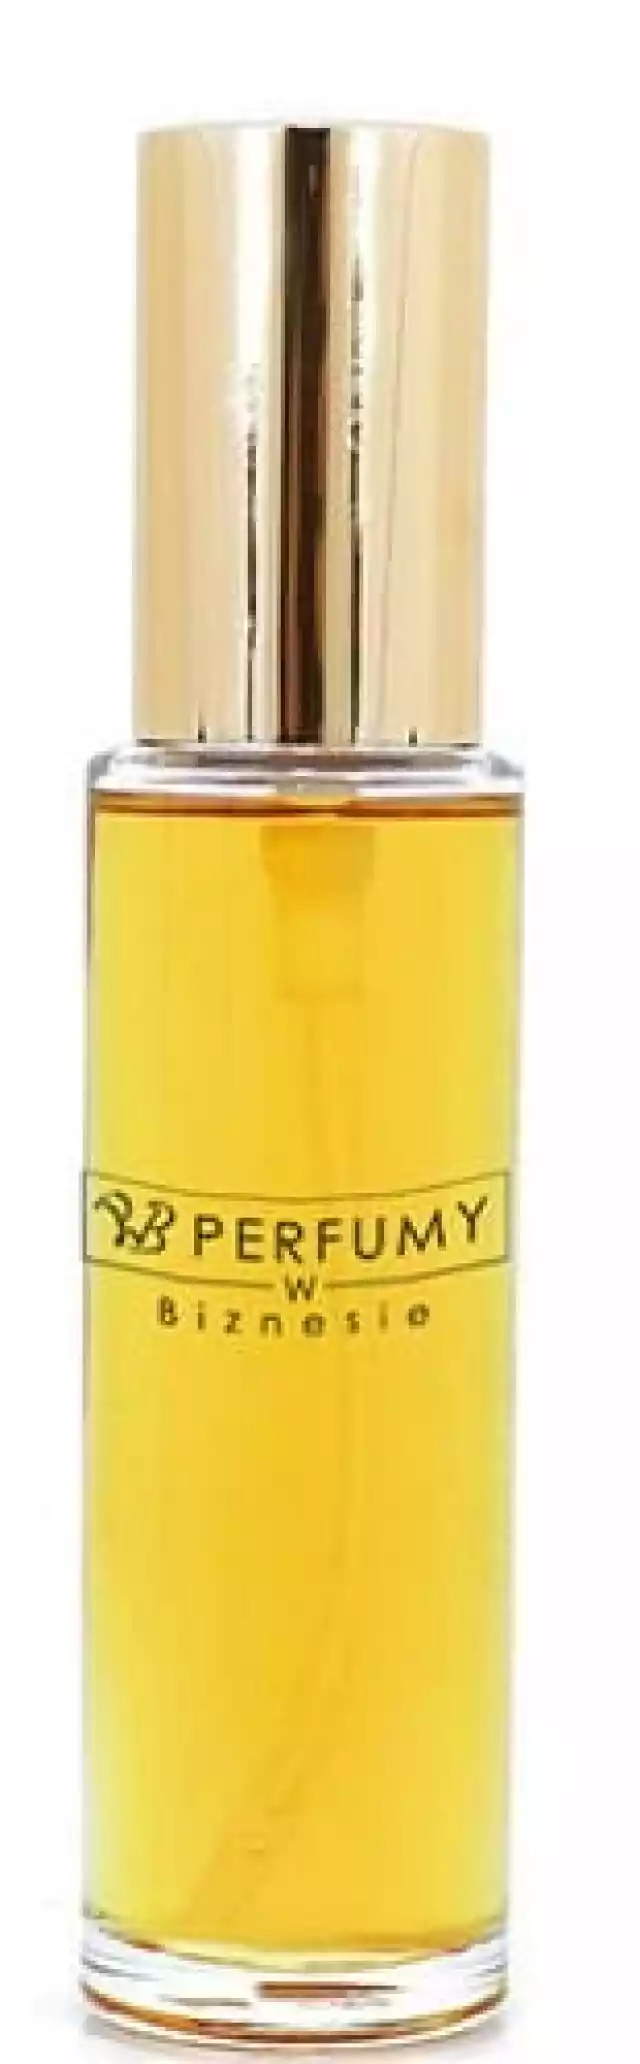 Perfumy 776 33Ml Inspirowane Hugo Boss, Boss Selection